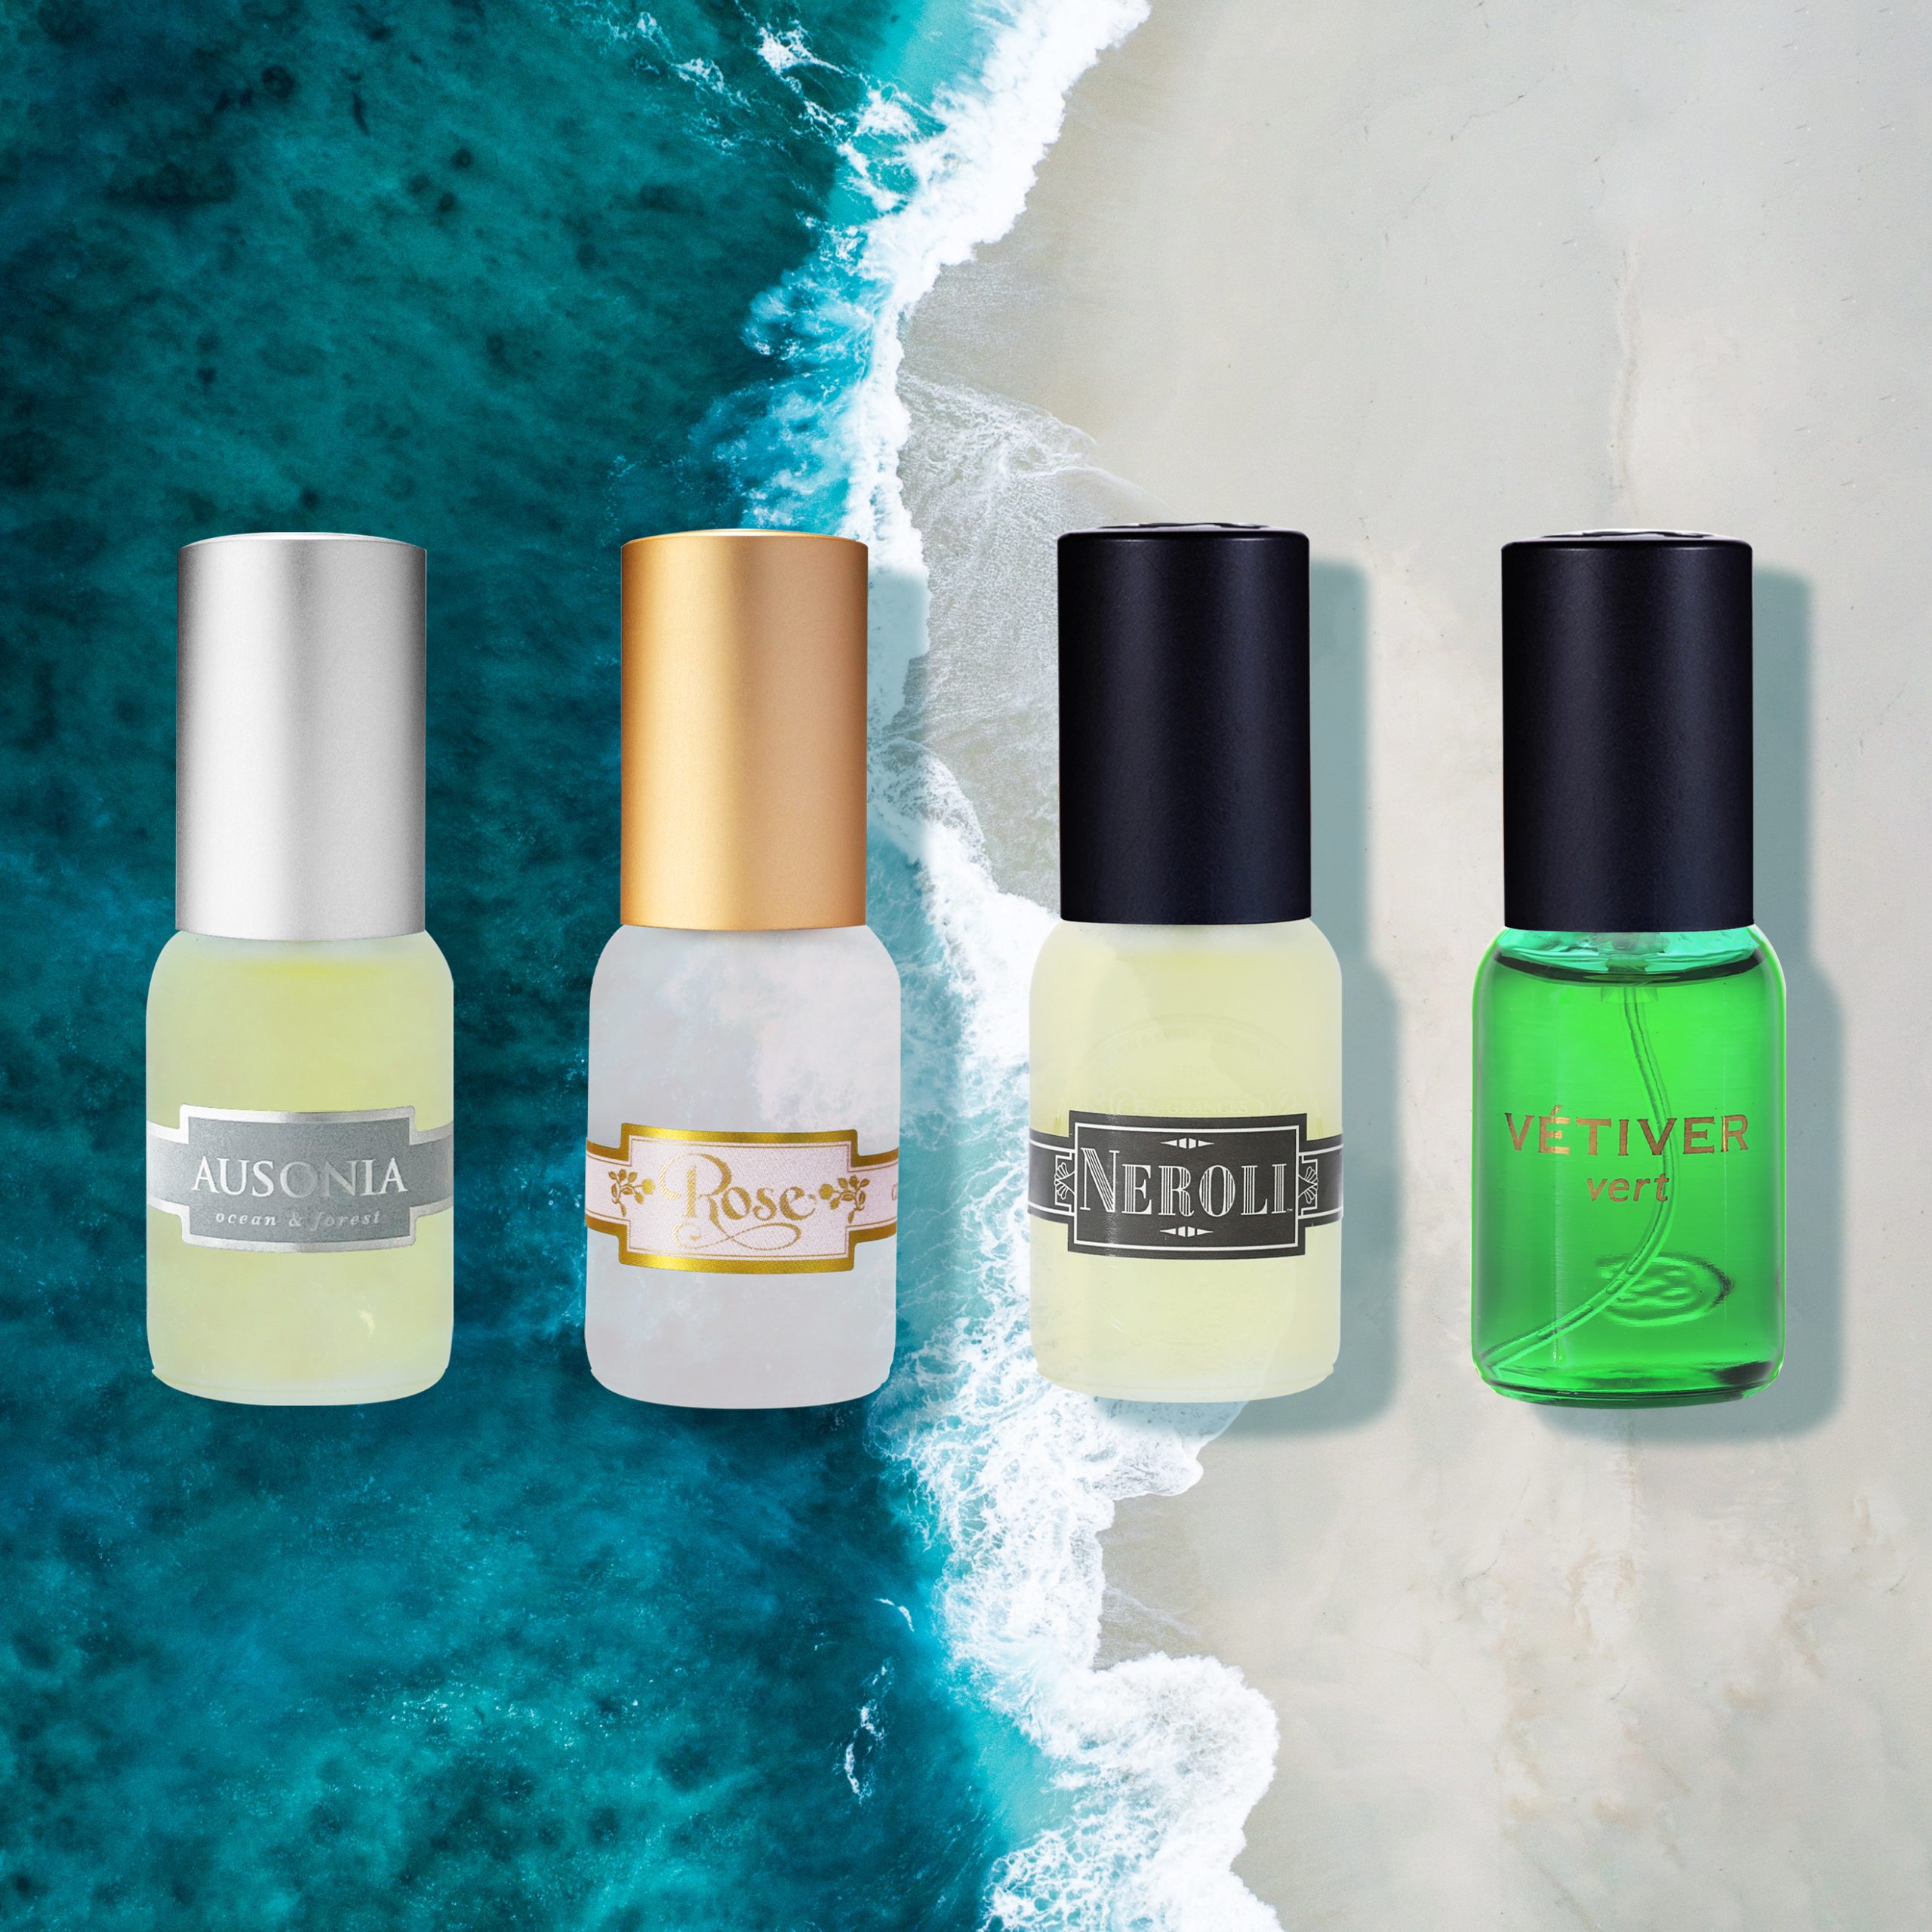 Four summer Eau de Parfum 15ml travel size bottles, including Ausonia, Rose, Neroli and Vétiver Vert, lined up against a beach and sea background.